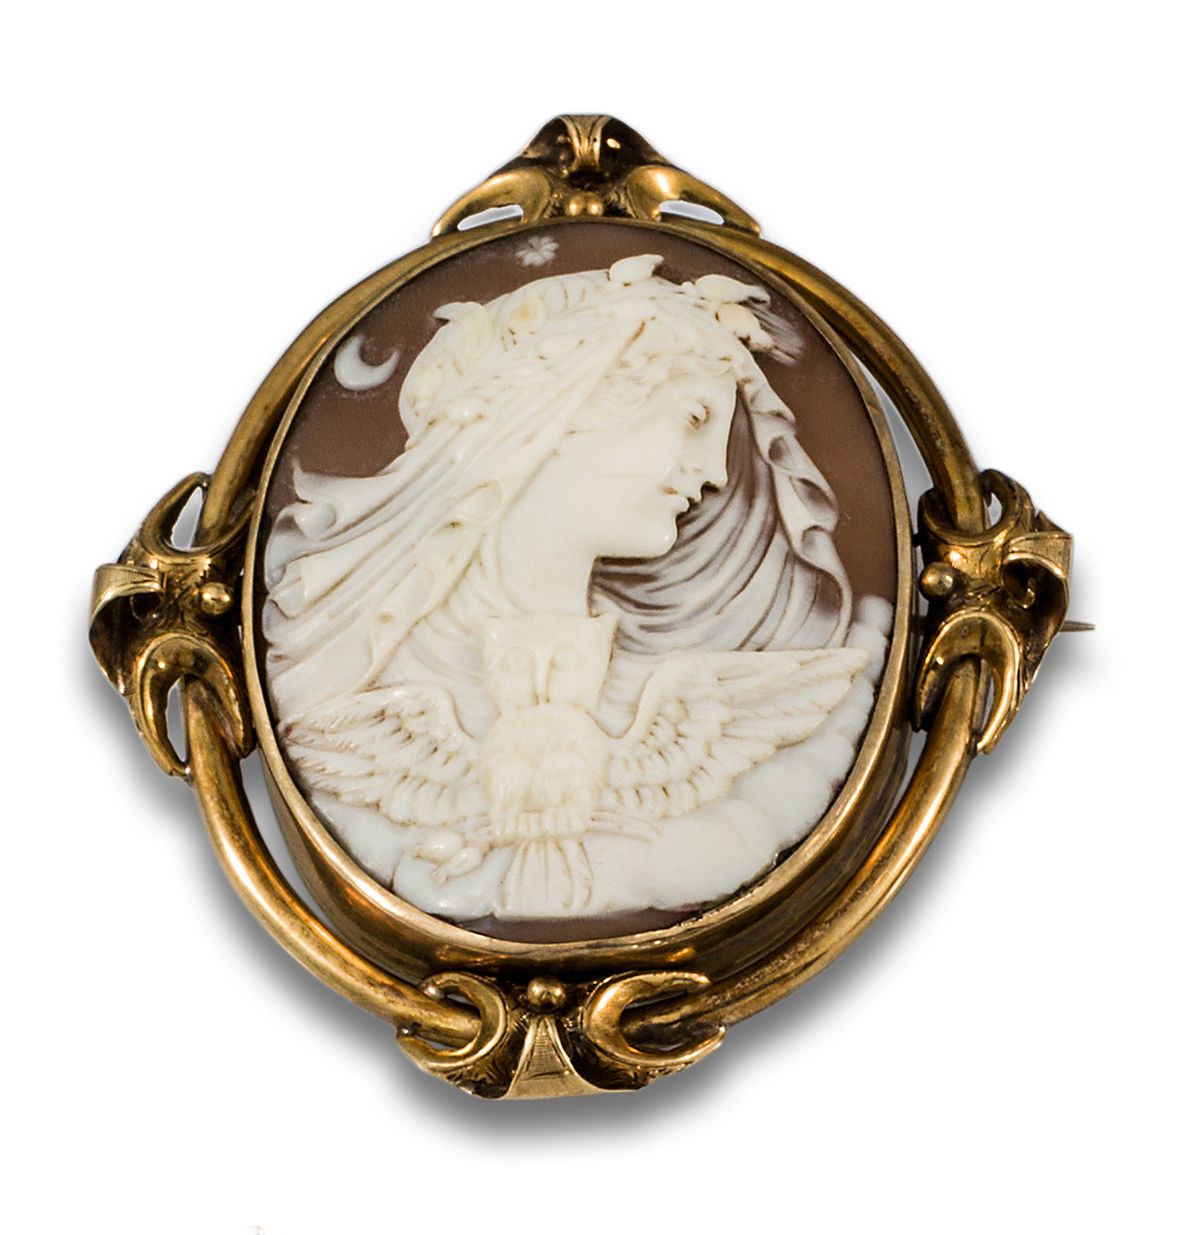 Gold cameo brooch 浮雕胸针，约19世纪，18K黄金，双色玛瑙被卷轴框住，在棱形ET上打孔。